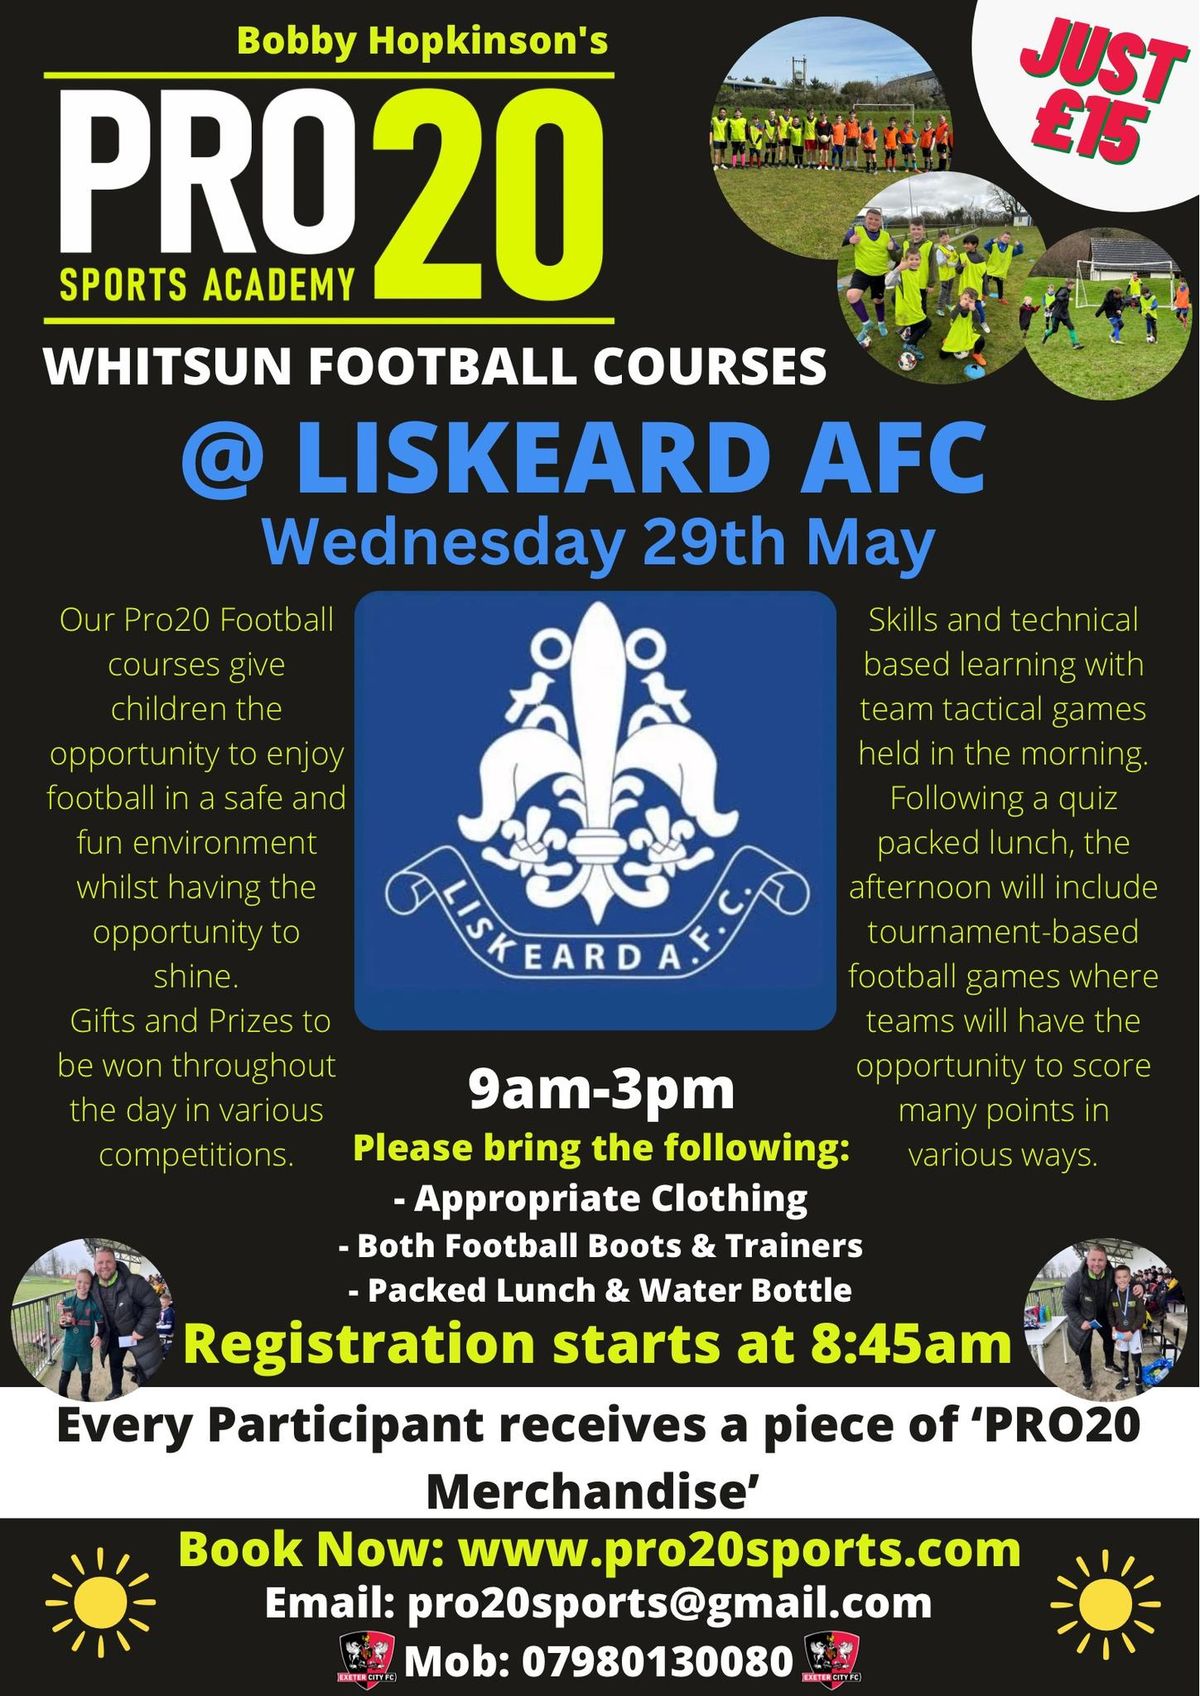 Pro20 Whitsun Football Course at Liskeard AFC